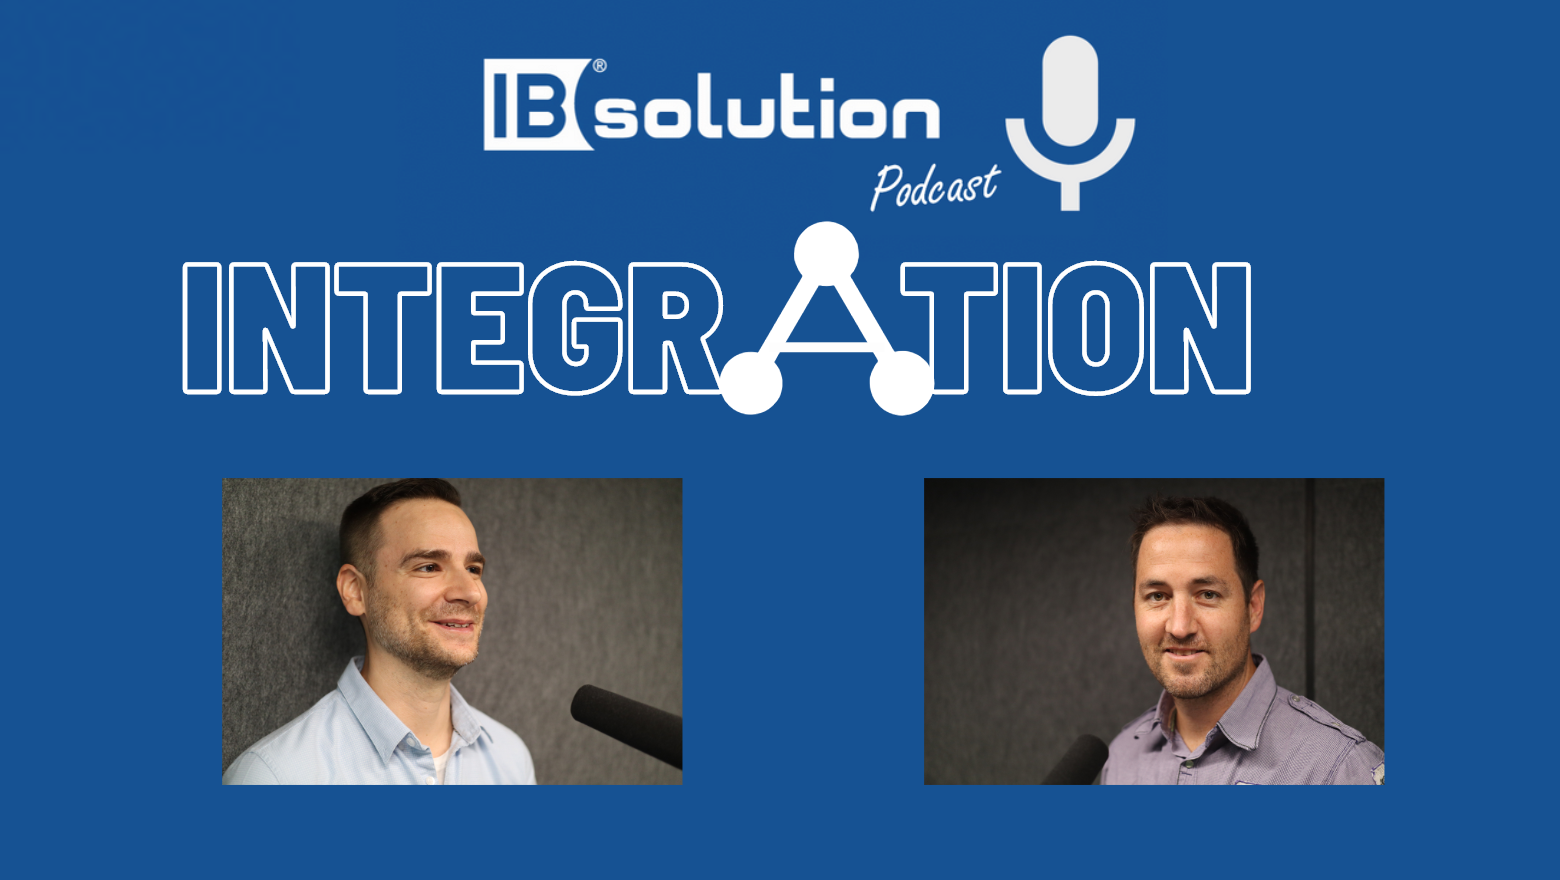 IBsolution Podcast Integration